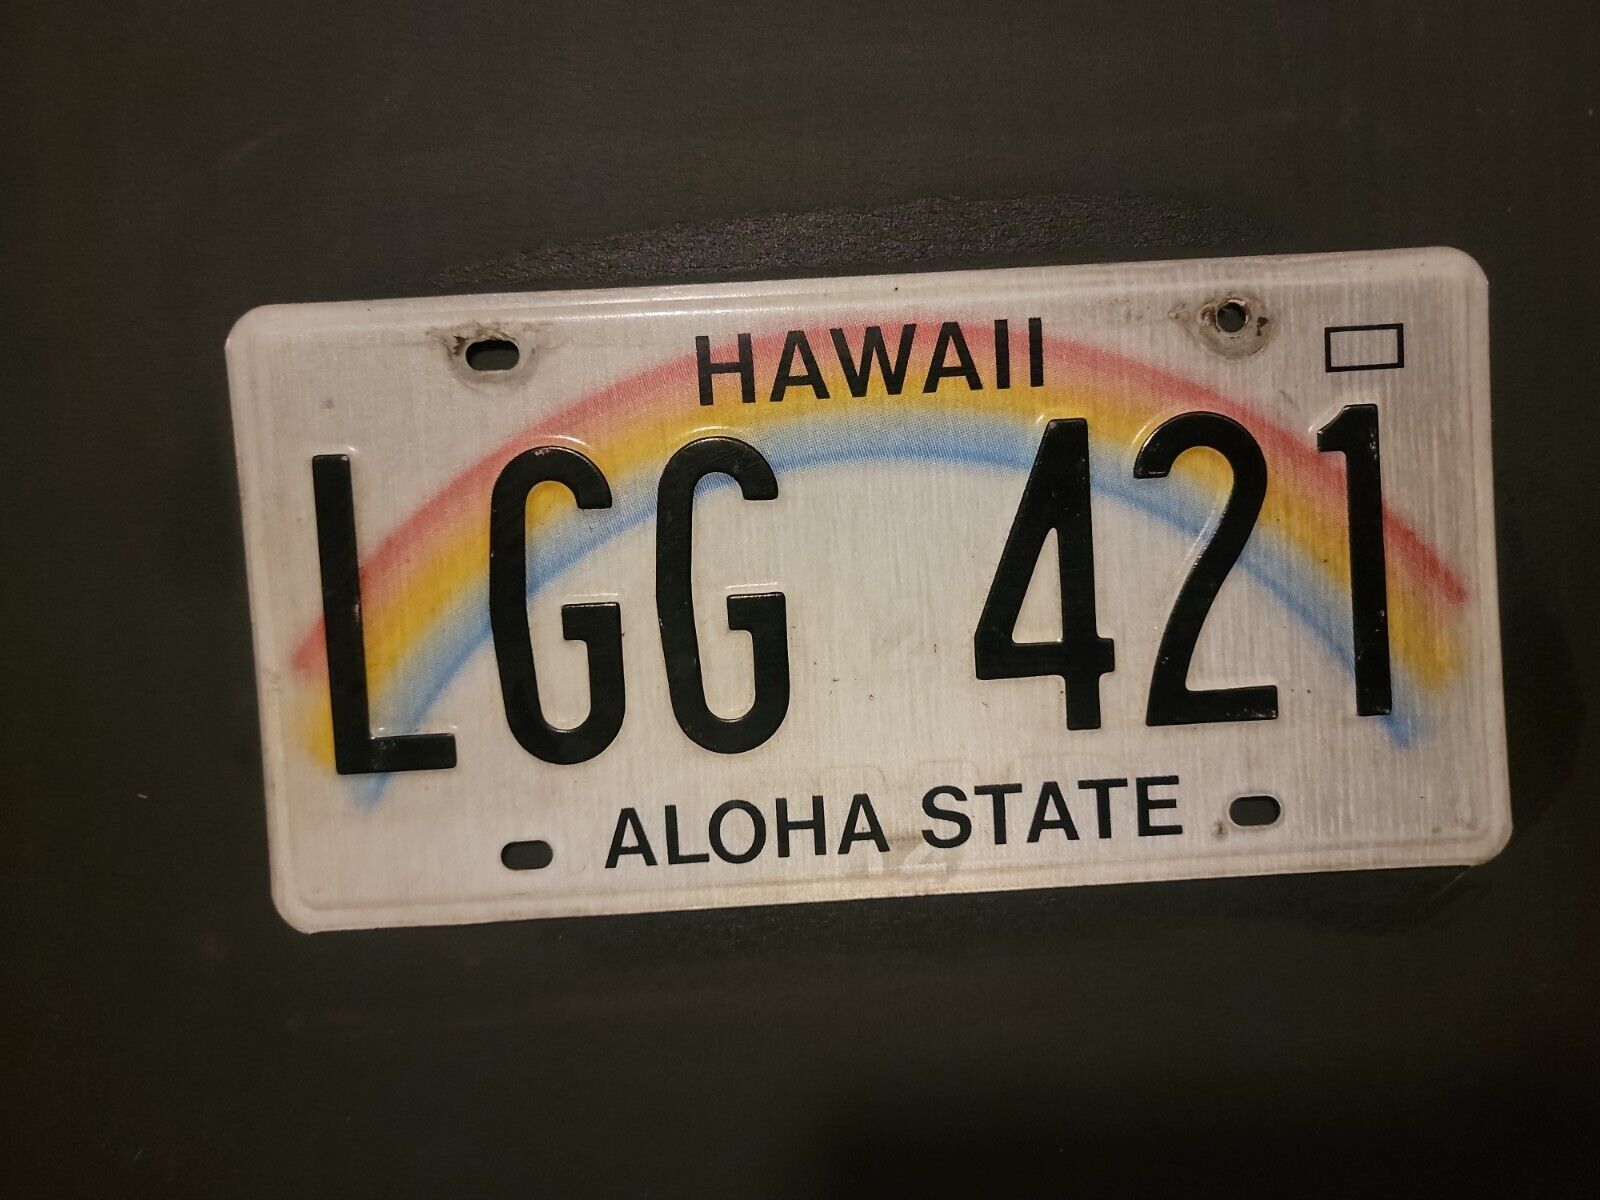 Vintage Hawaii Aloha State   License Plate    Lgg 421